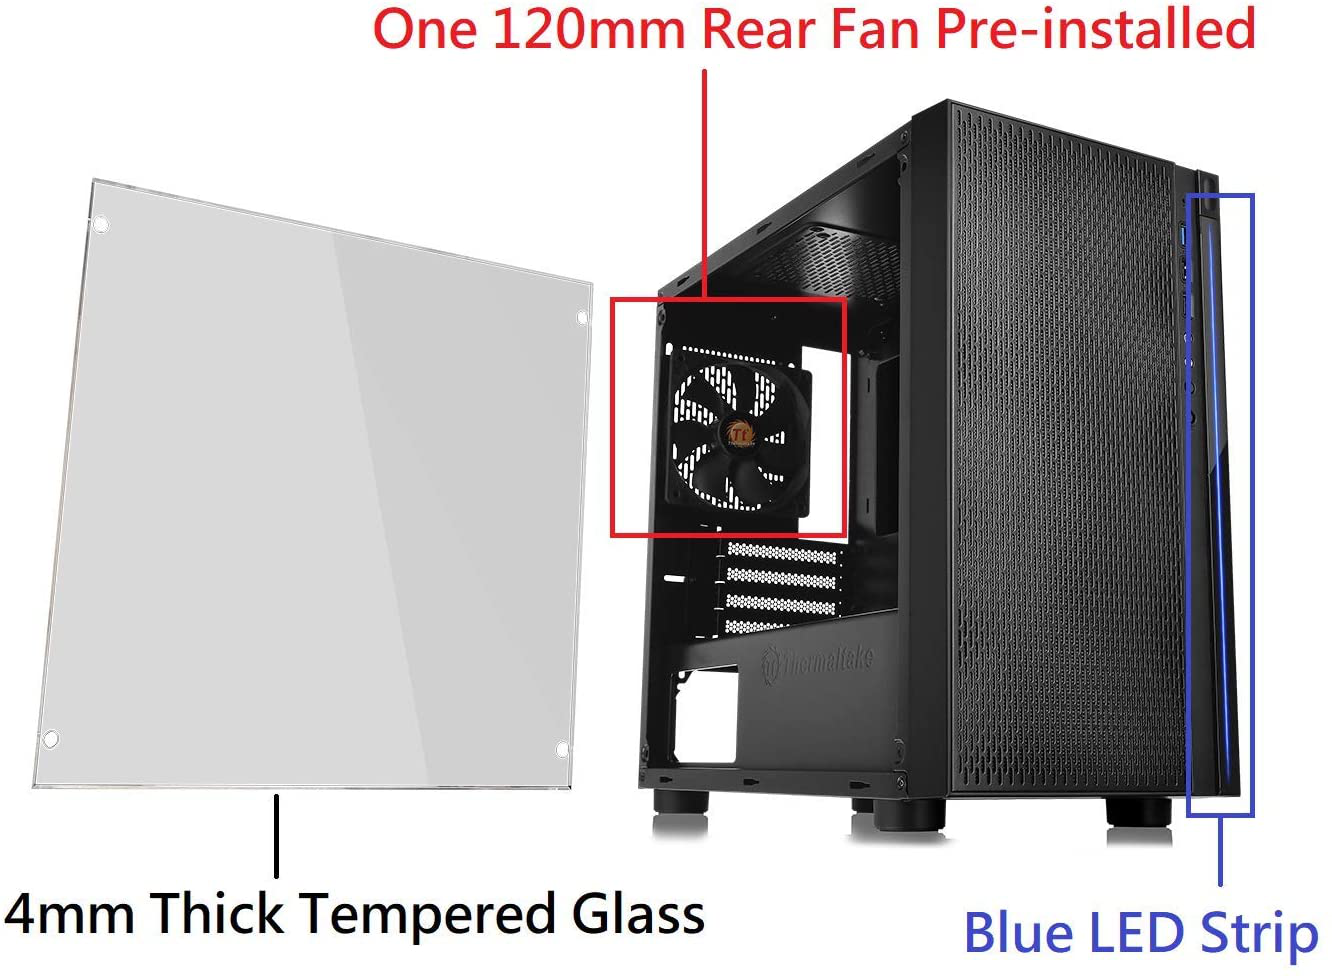 Thermaltake Versa H18 Tempered Glass Black Spcc Micro ATX Gaming Computer Case CA-1J4-00S1WN-01